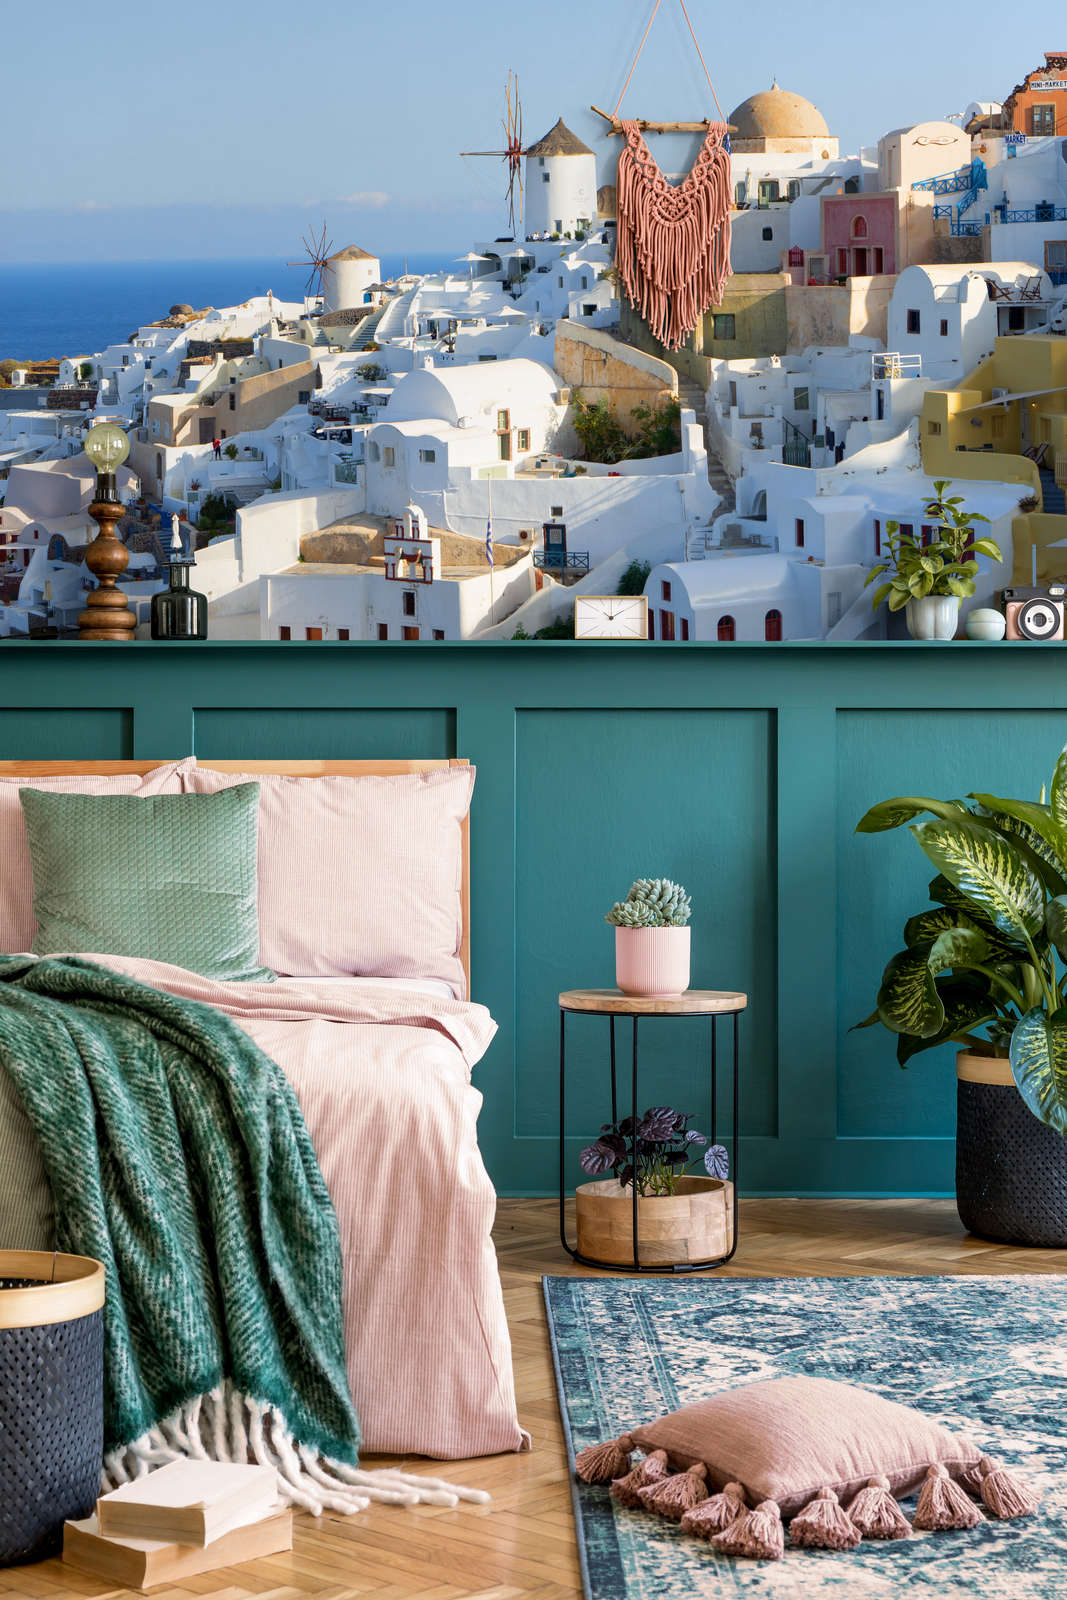             Digital behang Santorini's smalle steegjes - parelmoer glad non-woven
        